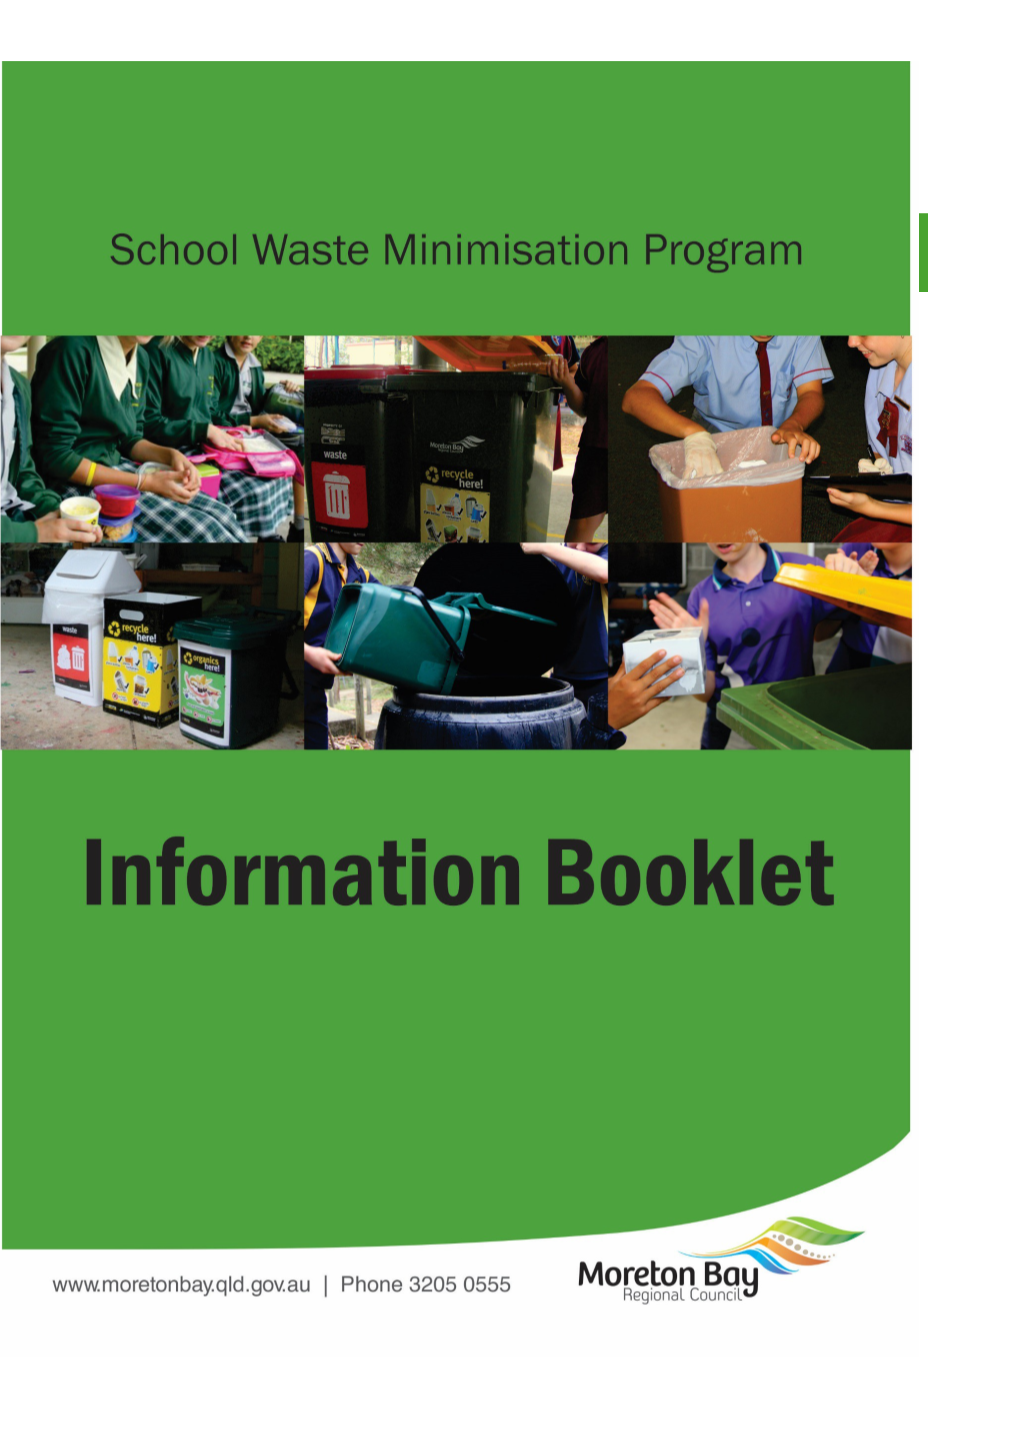 School Waste Minimisation Program Information Booklet